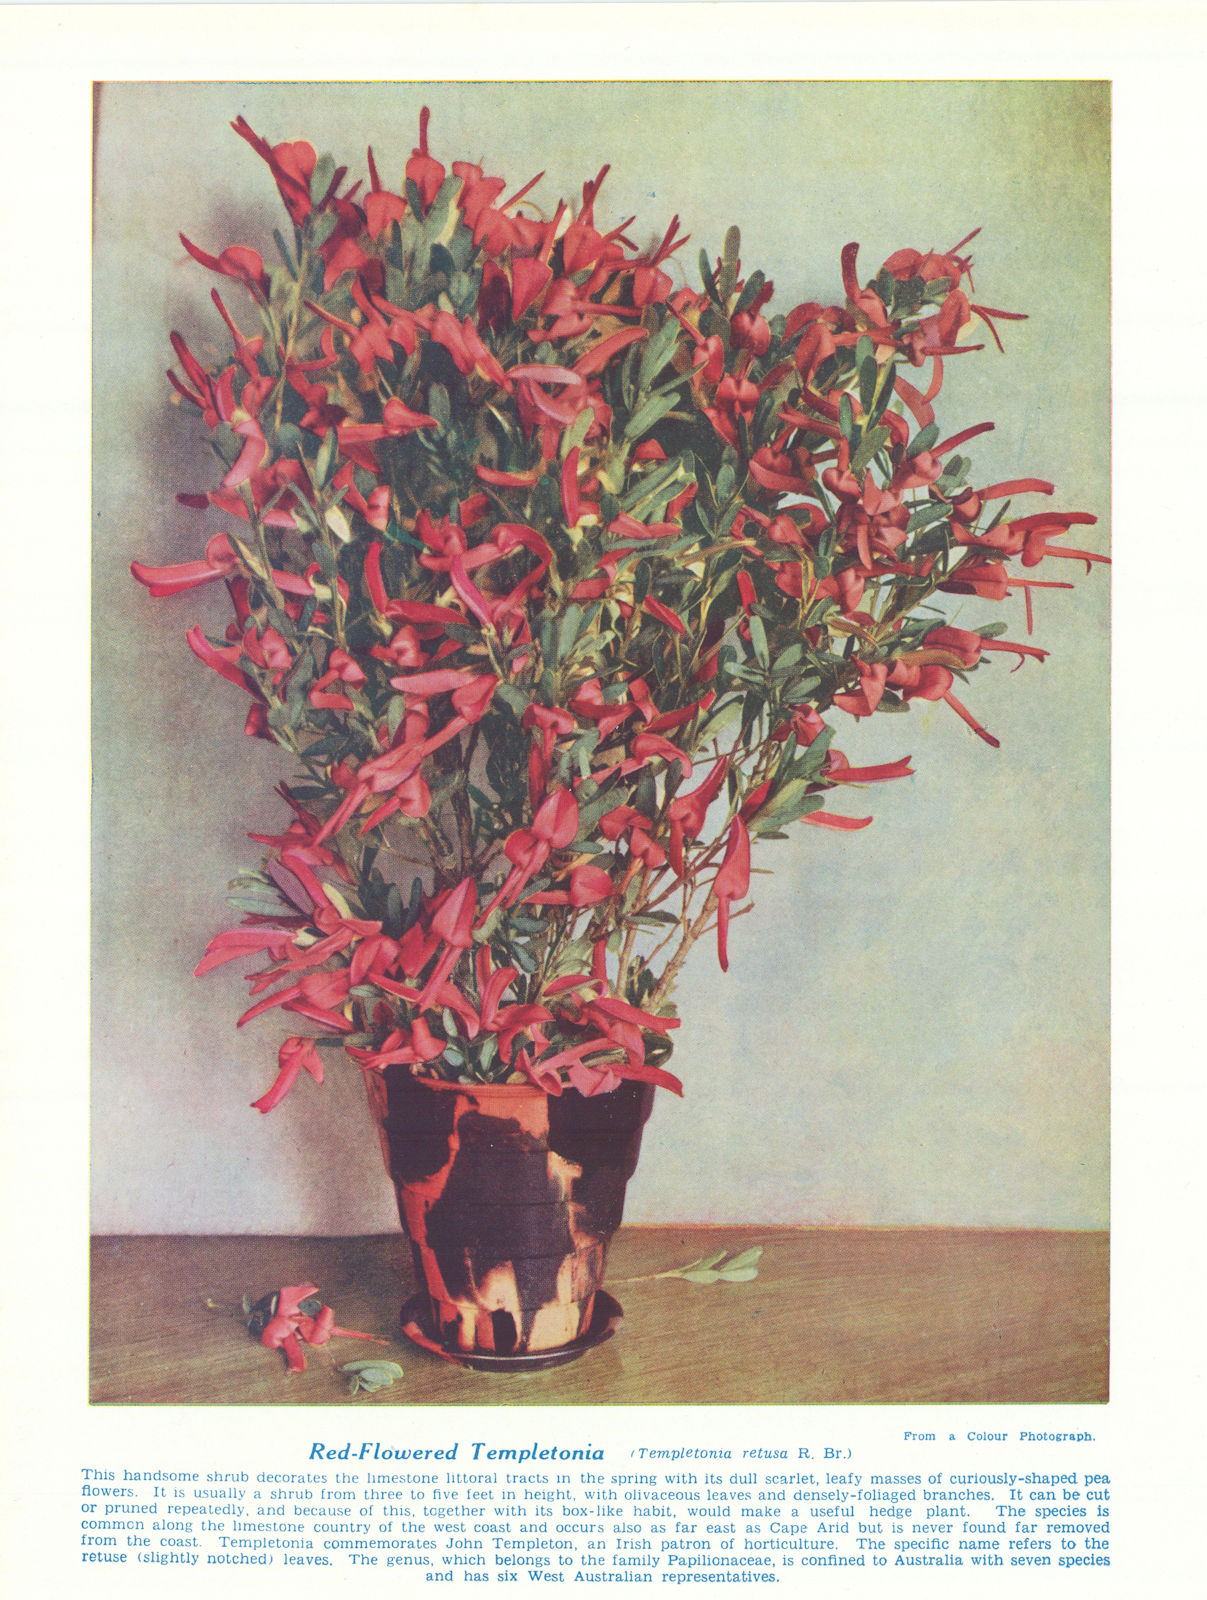 Red-flowered Templetonia (Templetonia retusa). West Australian Wild Flowers 1950